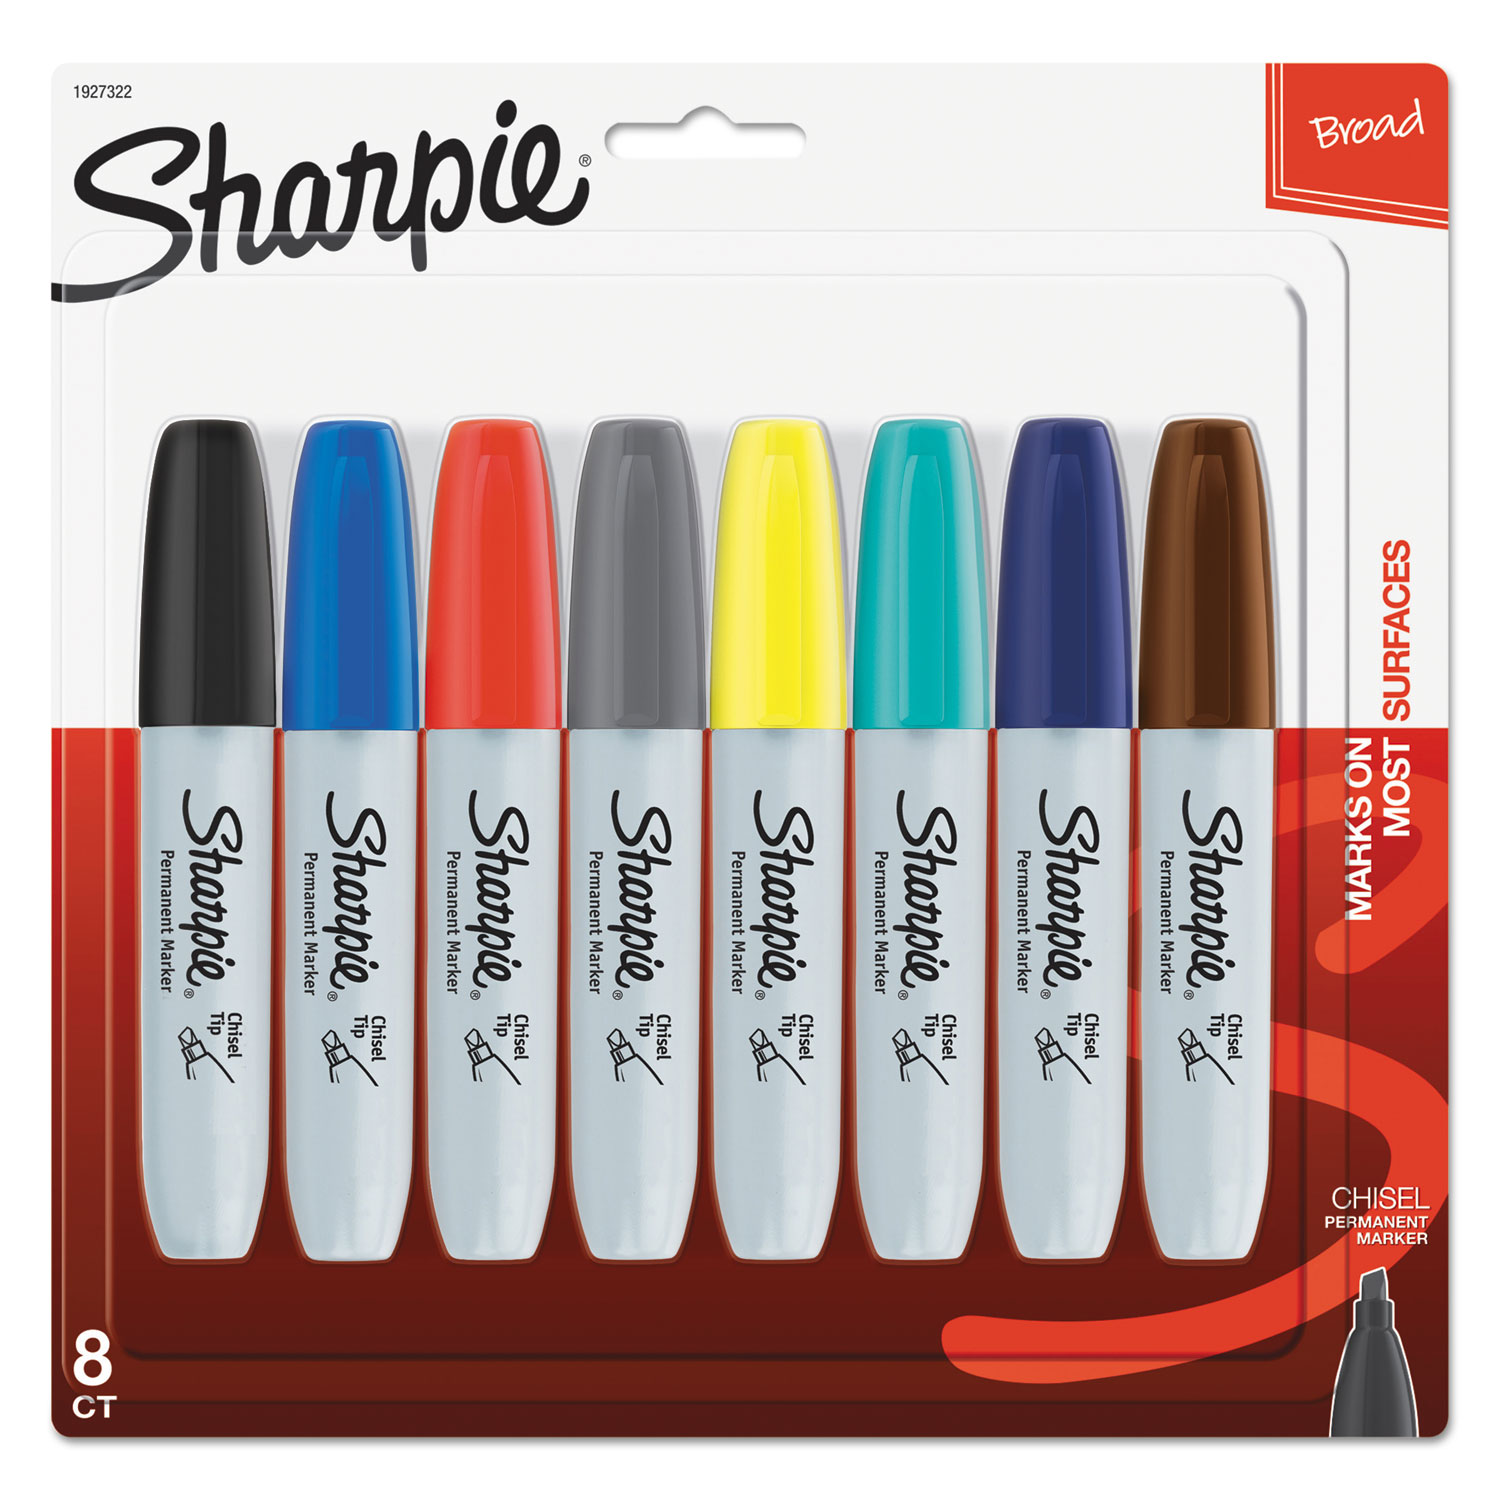 Sharpie King Size Permanent Marker Chisel Tip Red Dozen